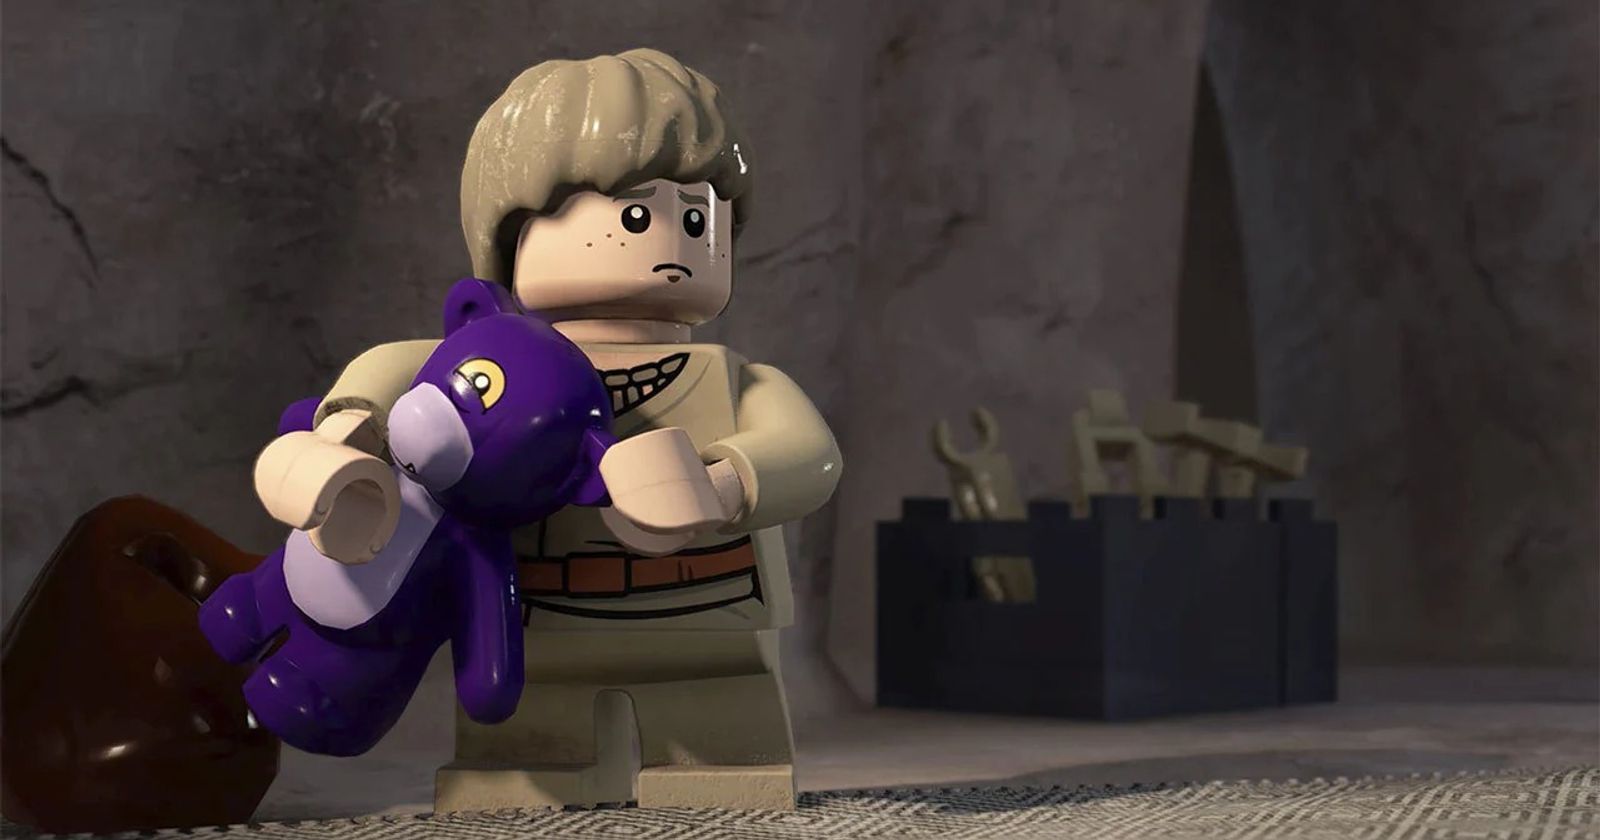 LEGO STAR WARS SKYWALKER SAGA CHEAT CODES